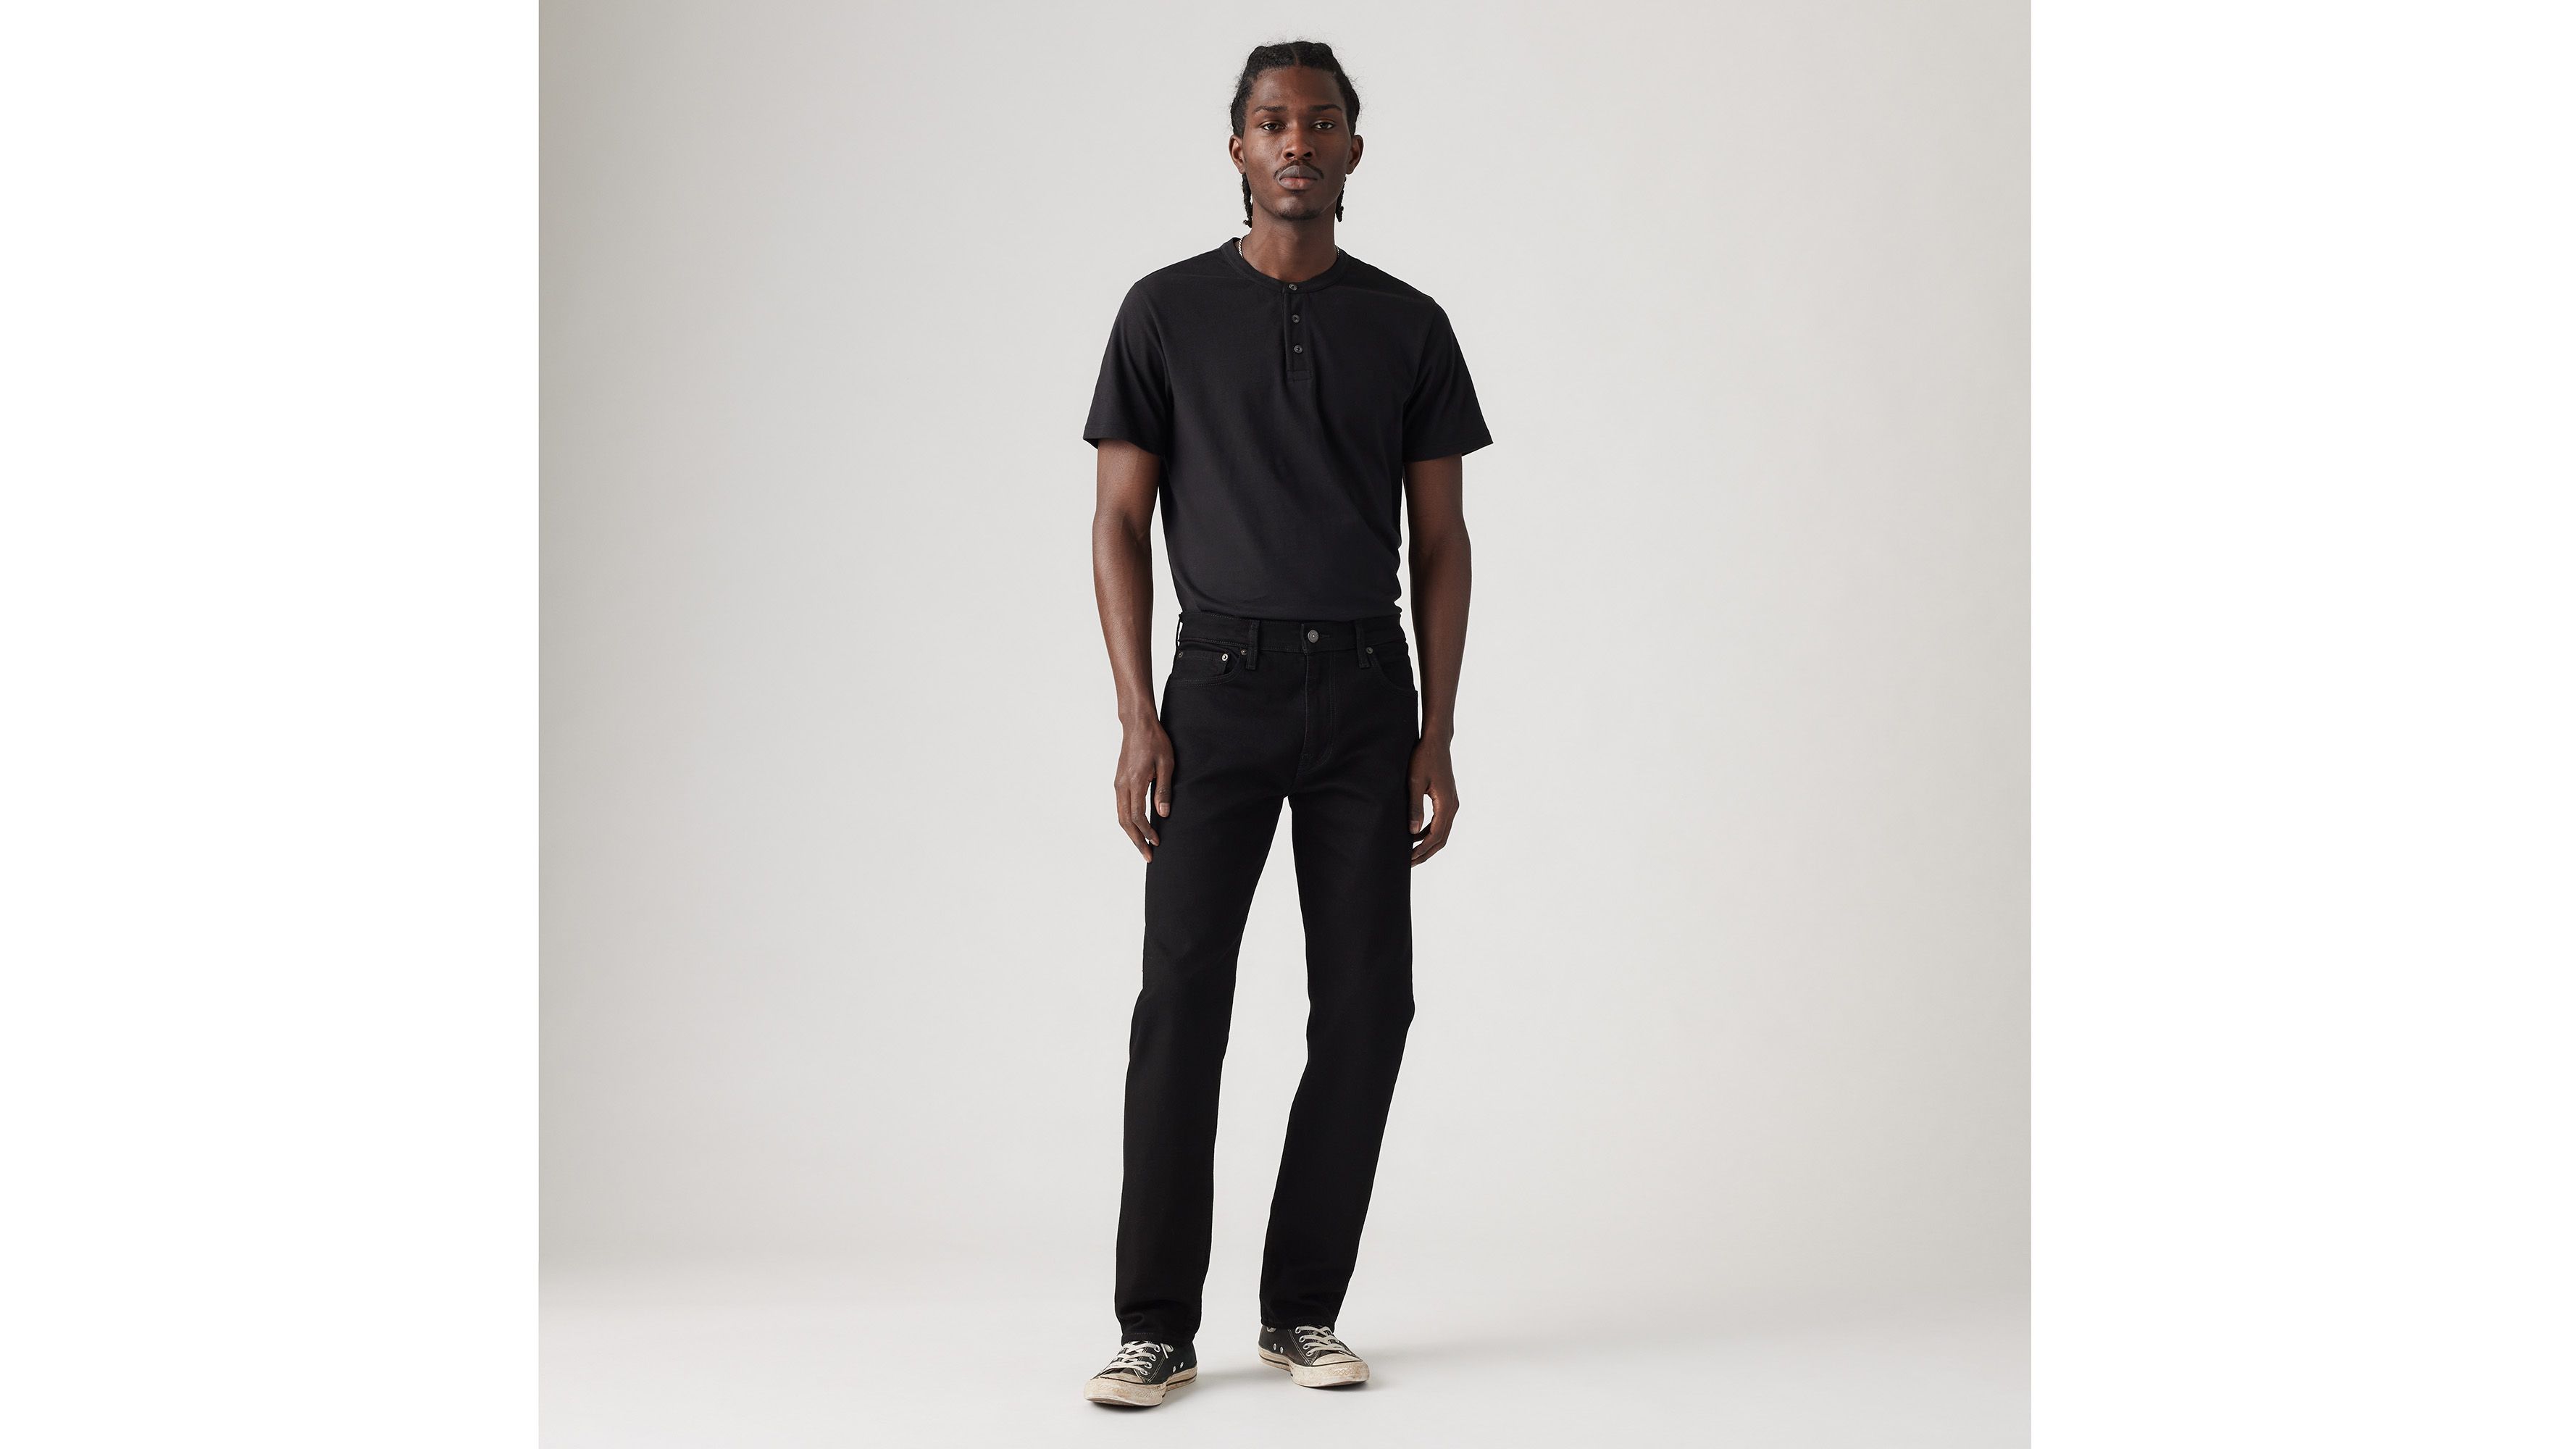 502™ Taper Levi's® Flex Men's Jeans - Black | Levi's® US